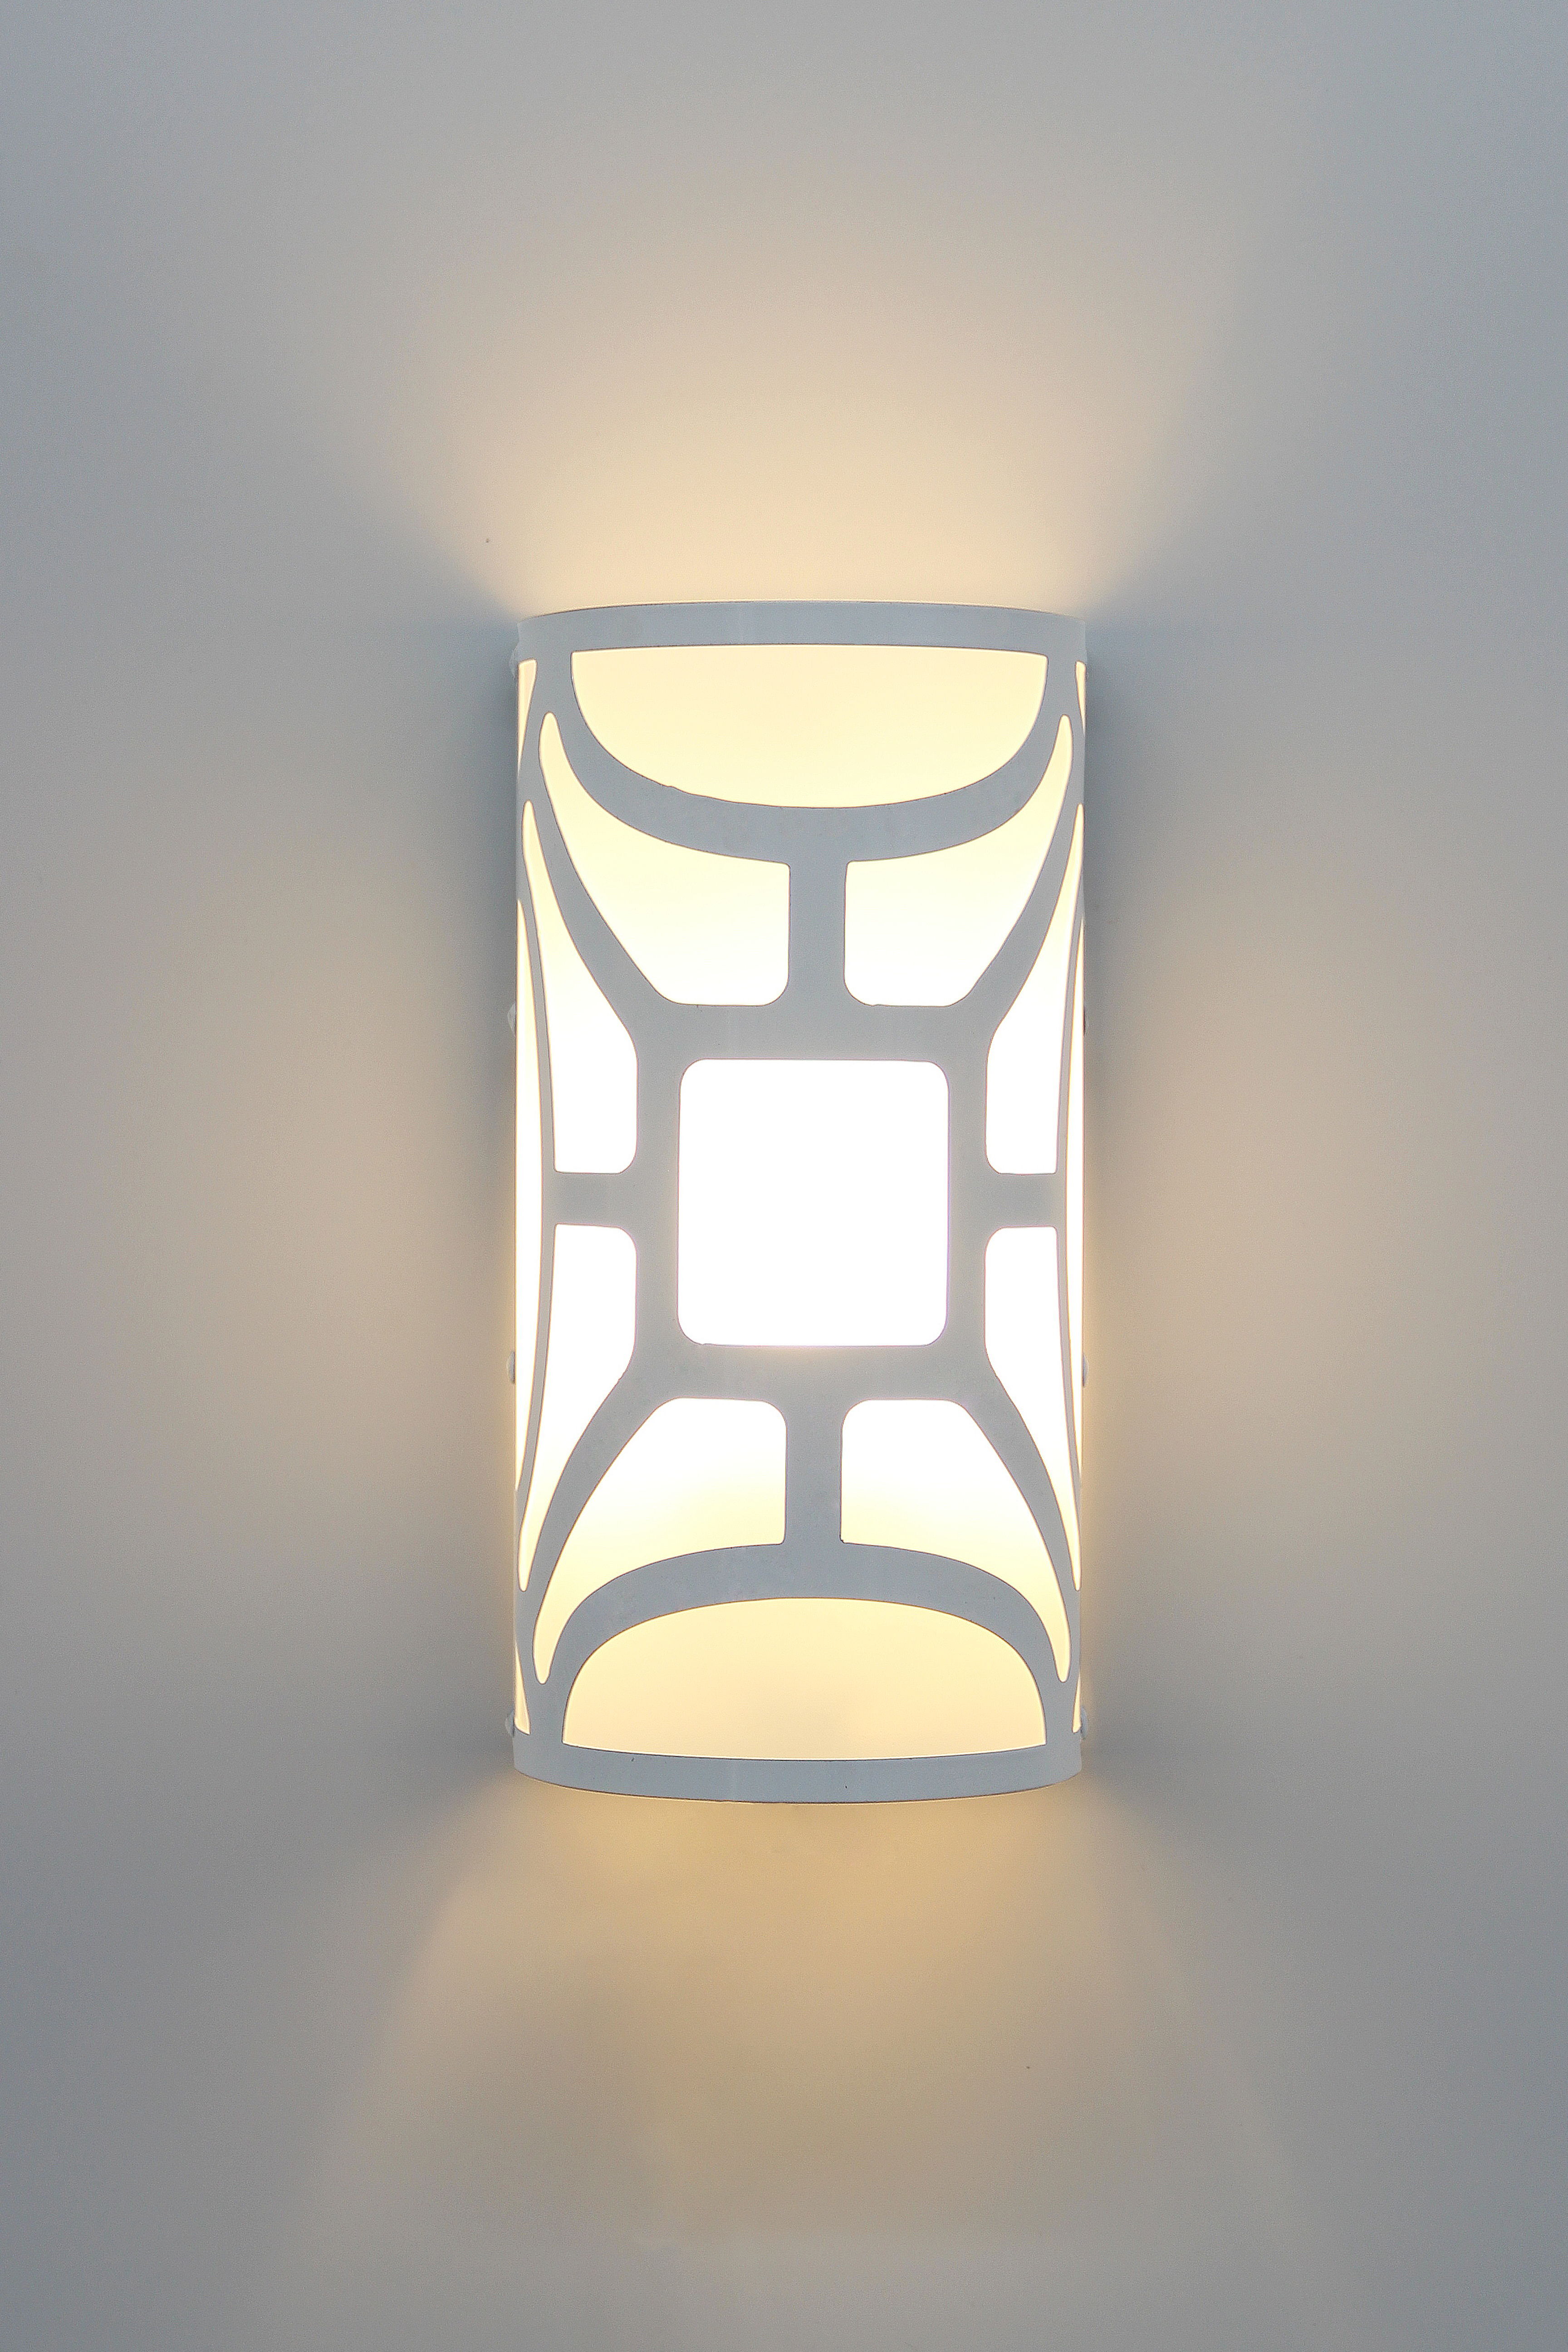 Интерьерный настенный светильник бра Комлед INTERIOR VUAL V, белый